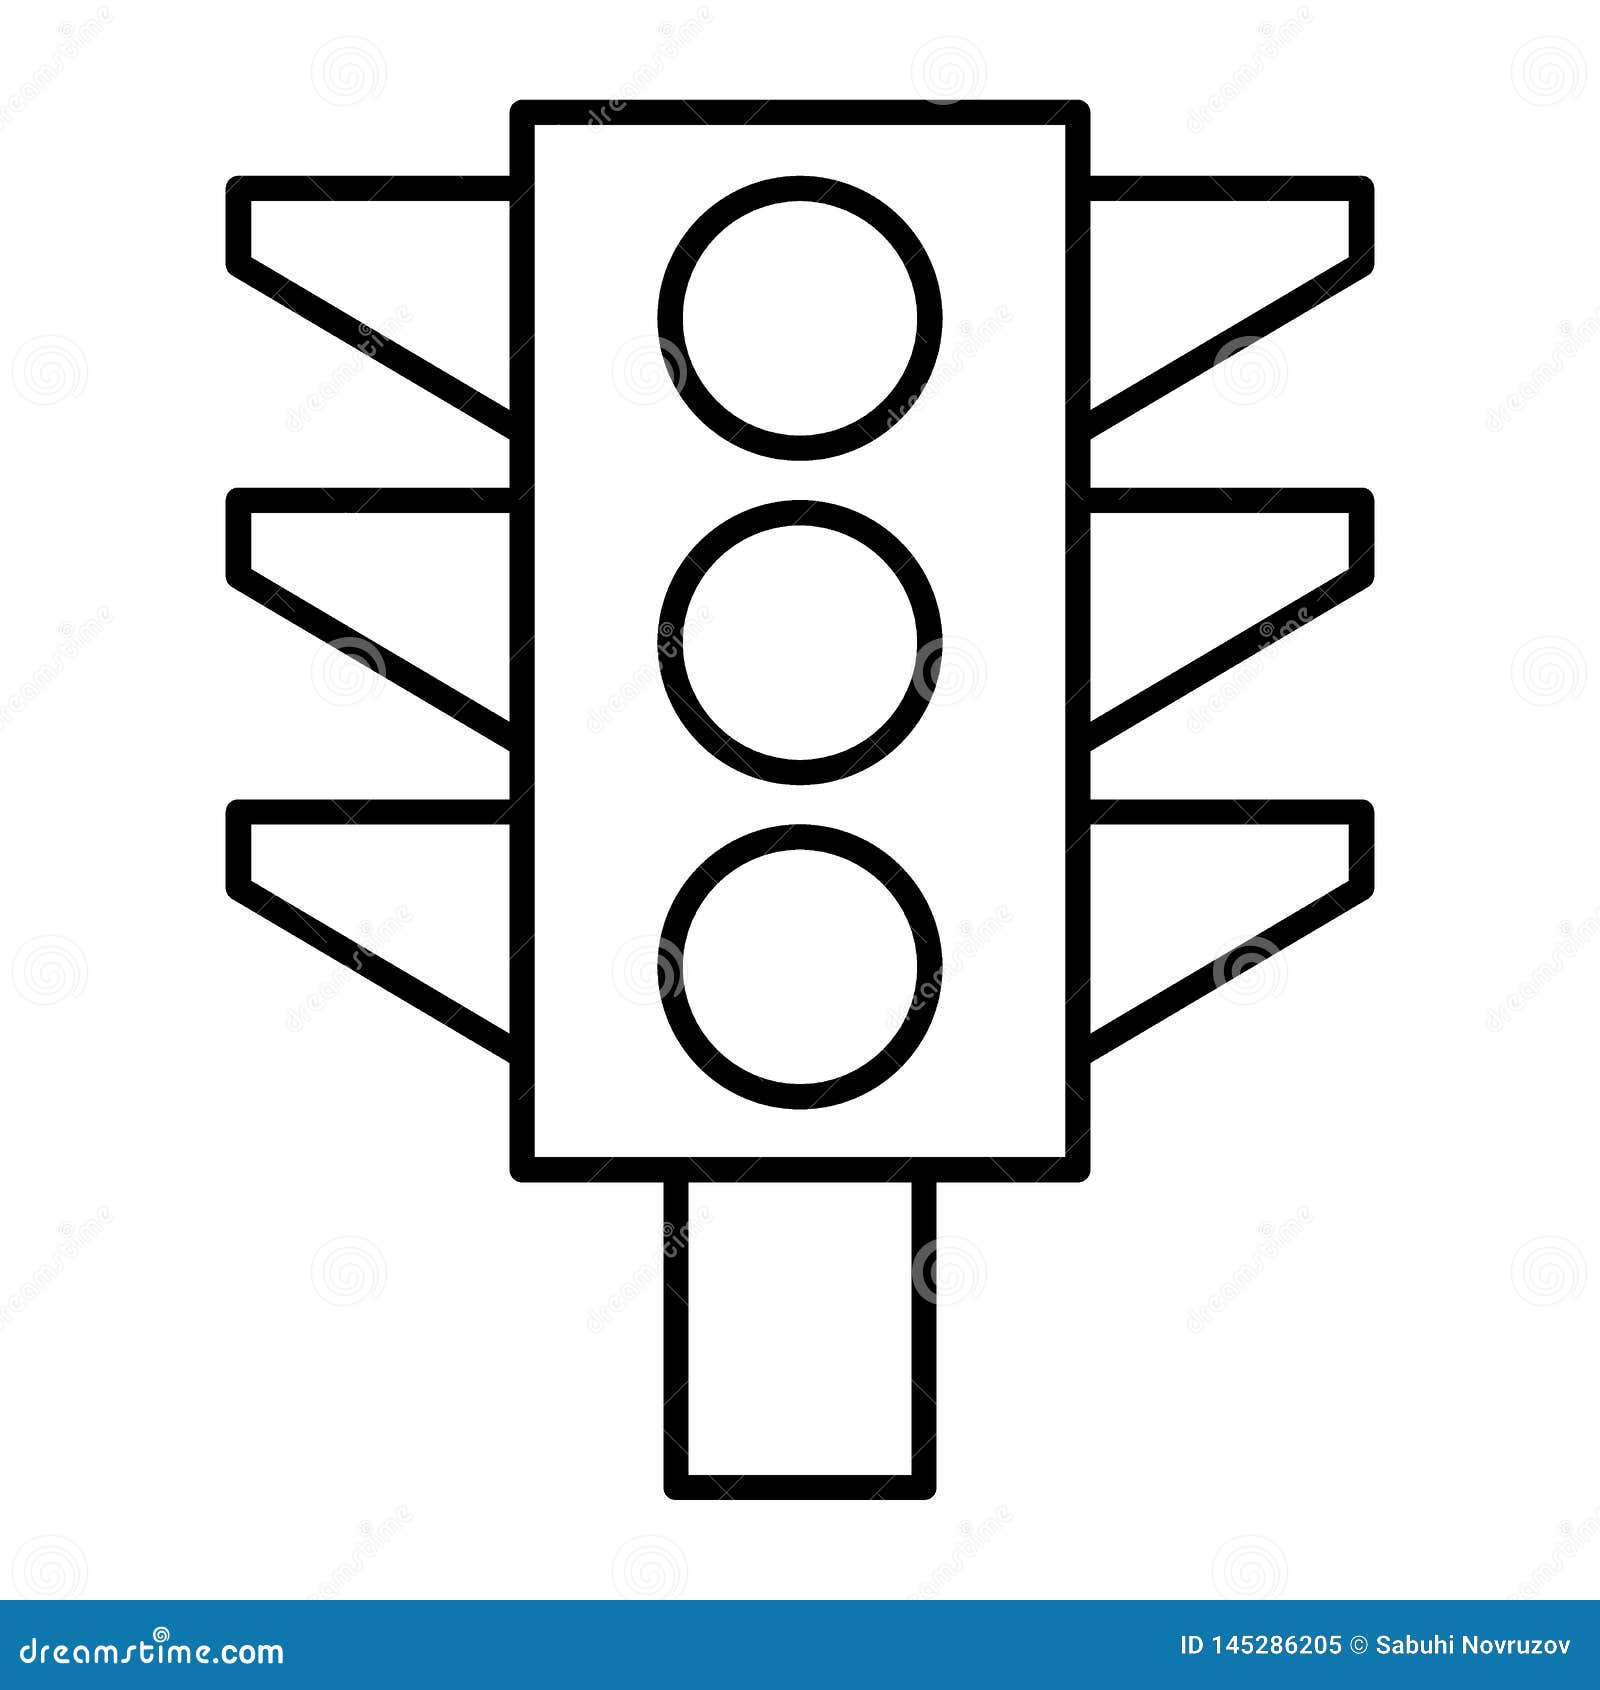 Traffic Light Thin Line Icon. Traffic Signal Illustration Isolated on